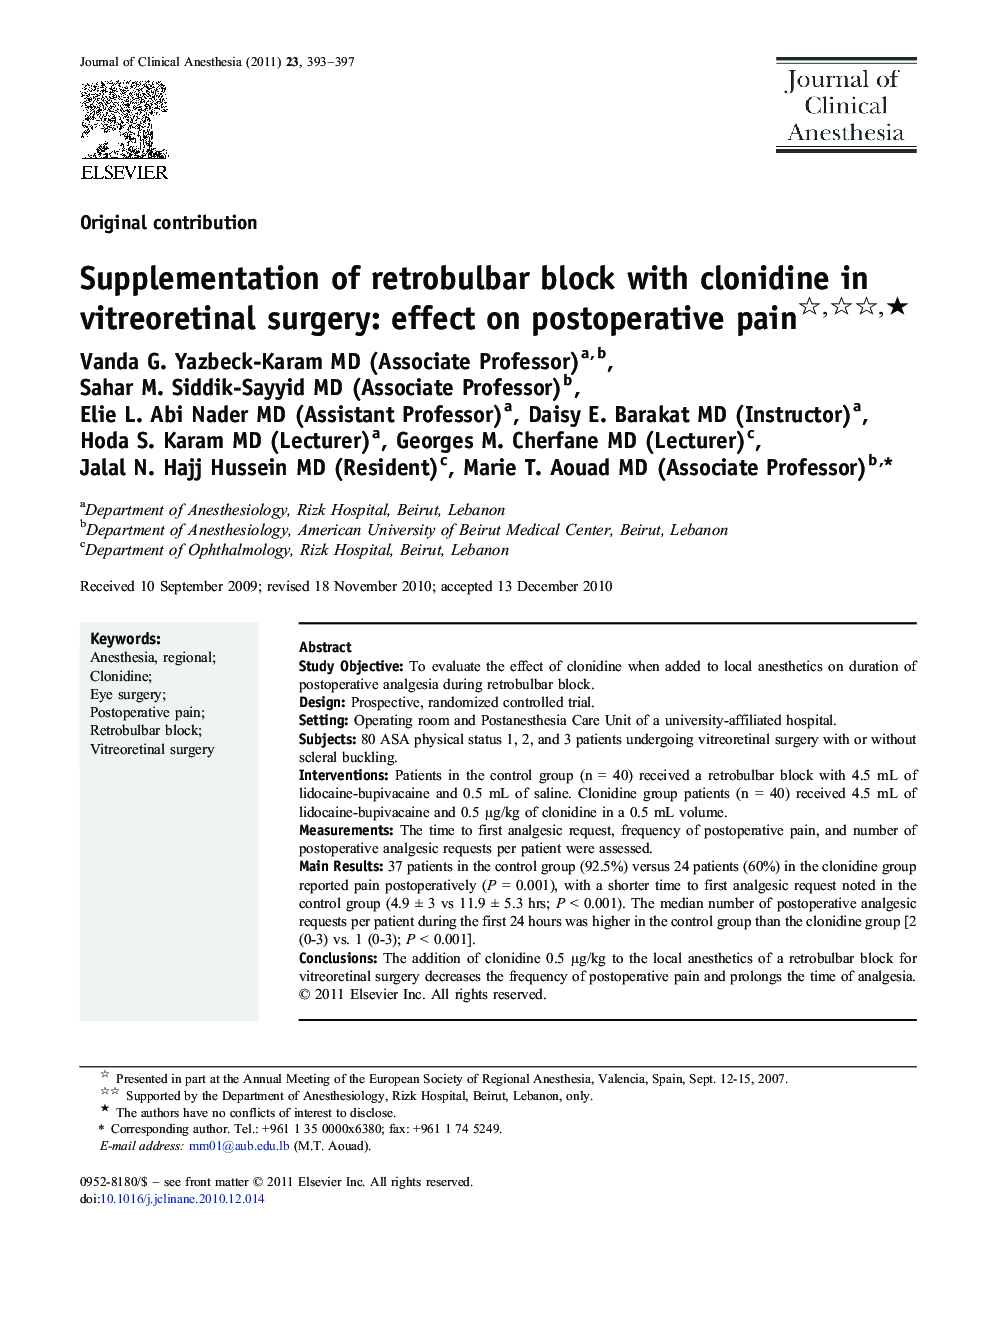 Supplementation of retrobulbar block with clonidine in vitreoretinal surgery: effect on postoperative pain ★